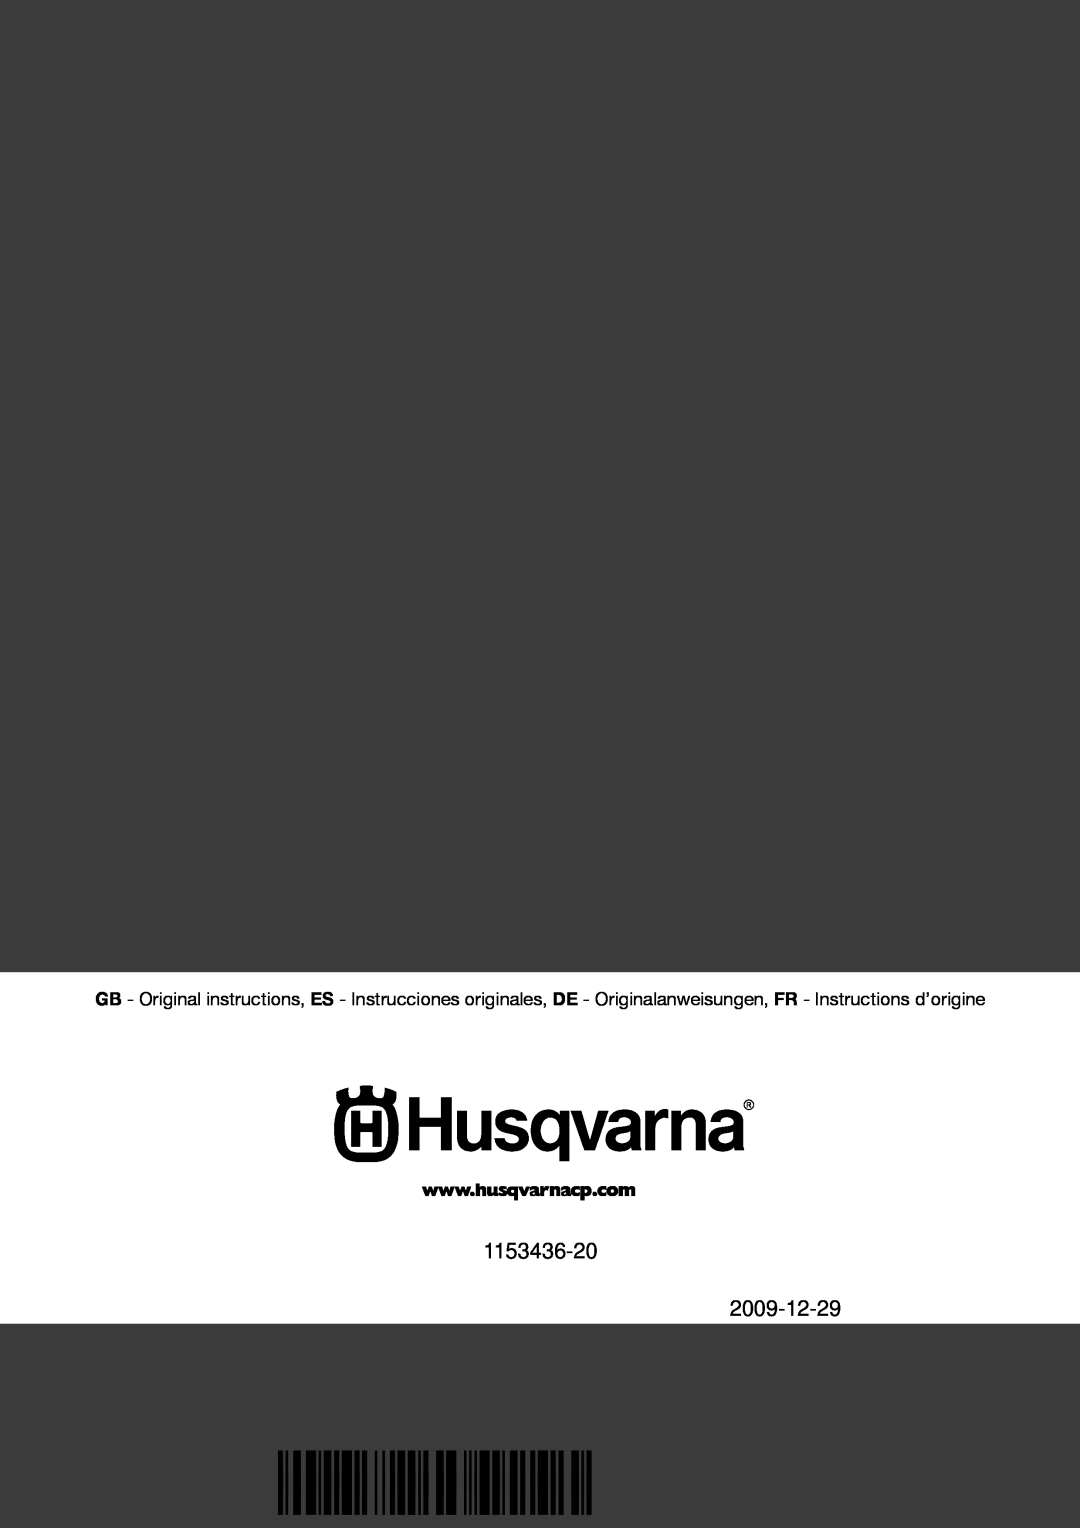 Husqvarna DC5500 manuel dutilisation ´z+UK ¶0z¨ ´z+UK ¶0z¨, 1153436-20 